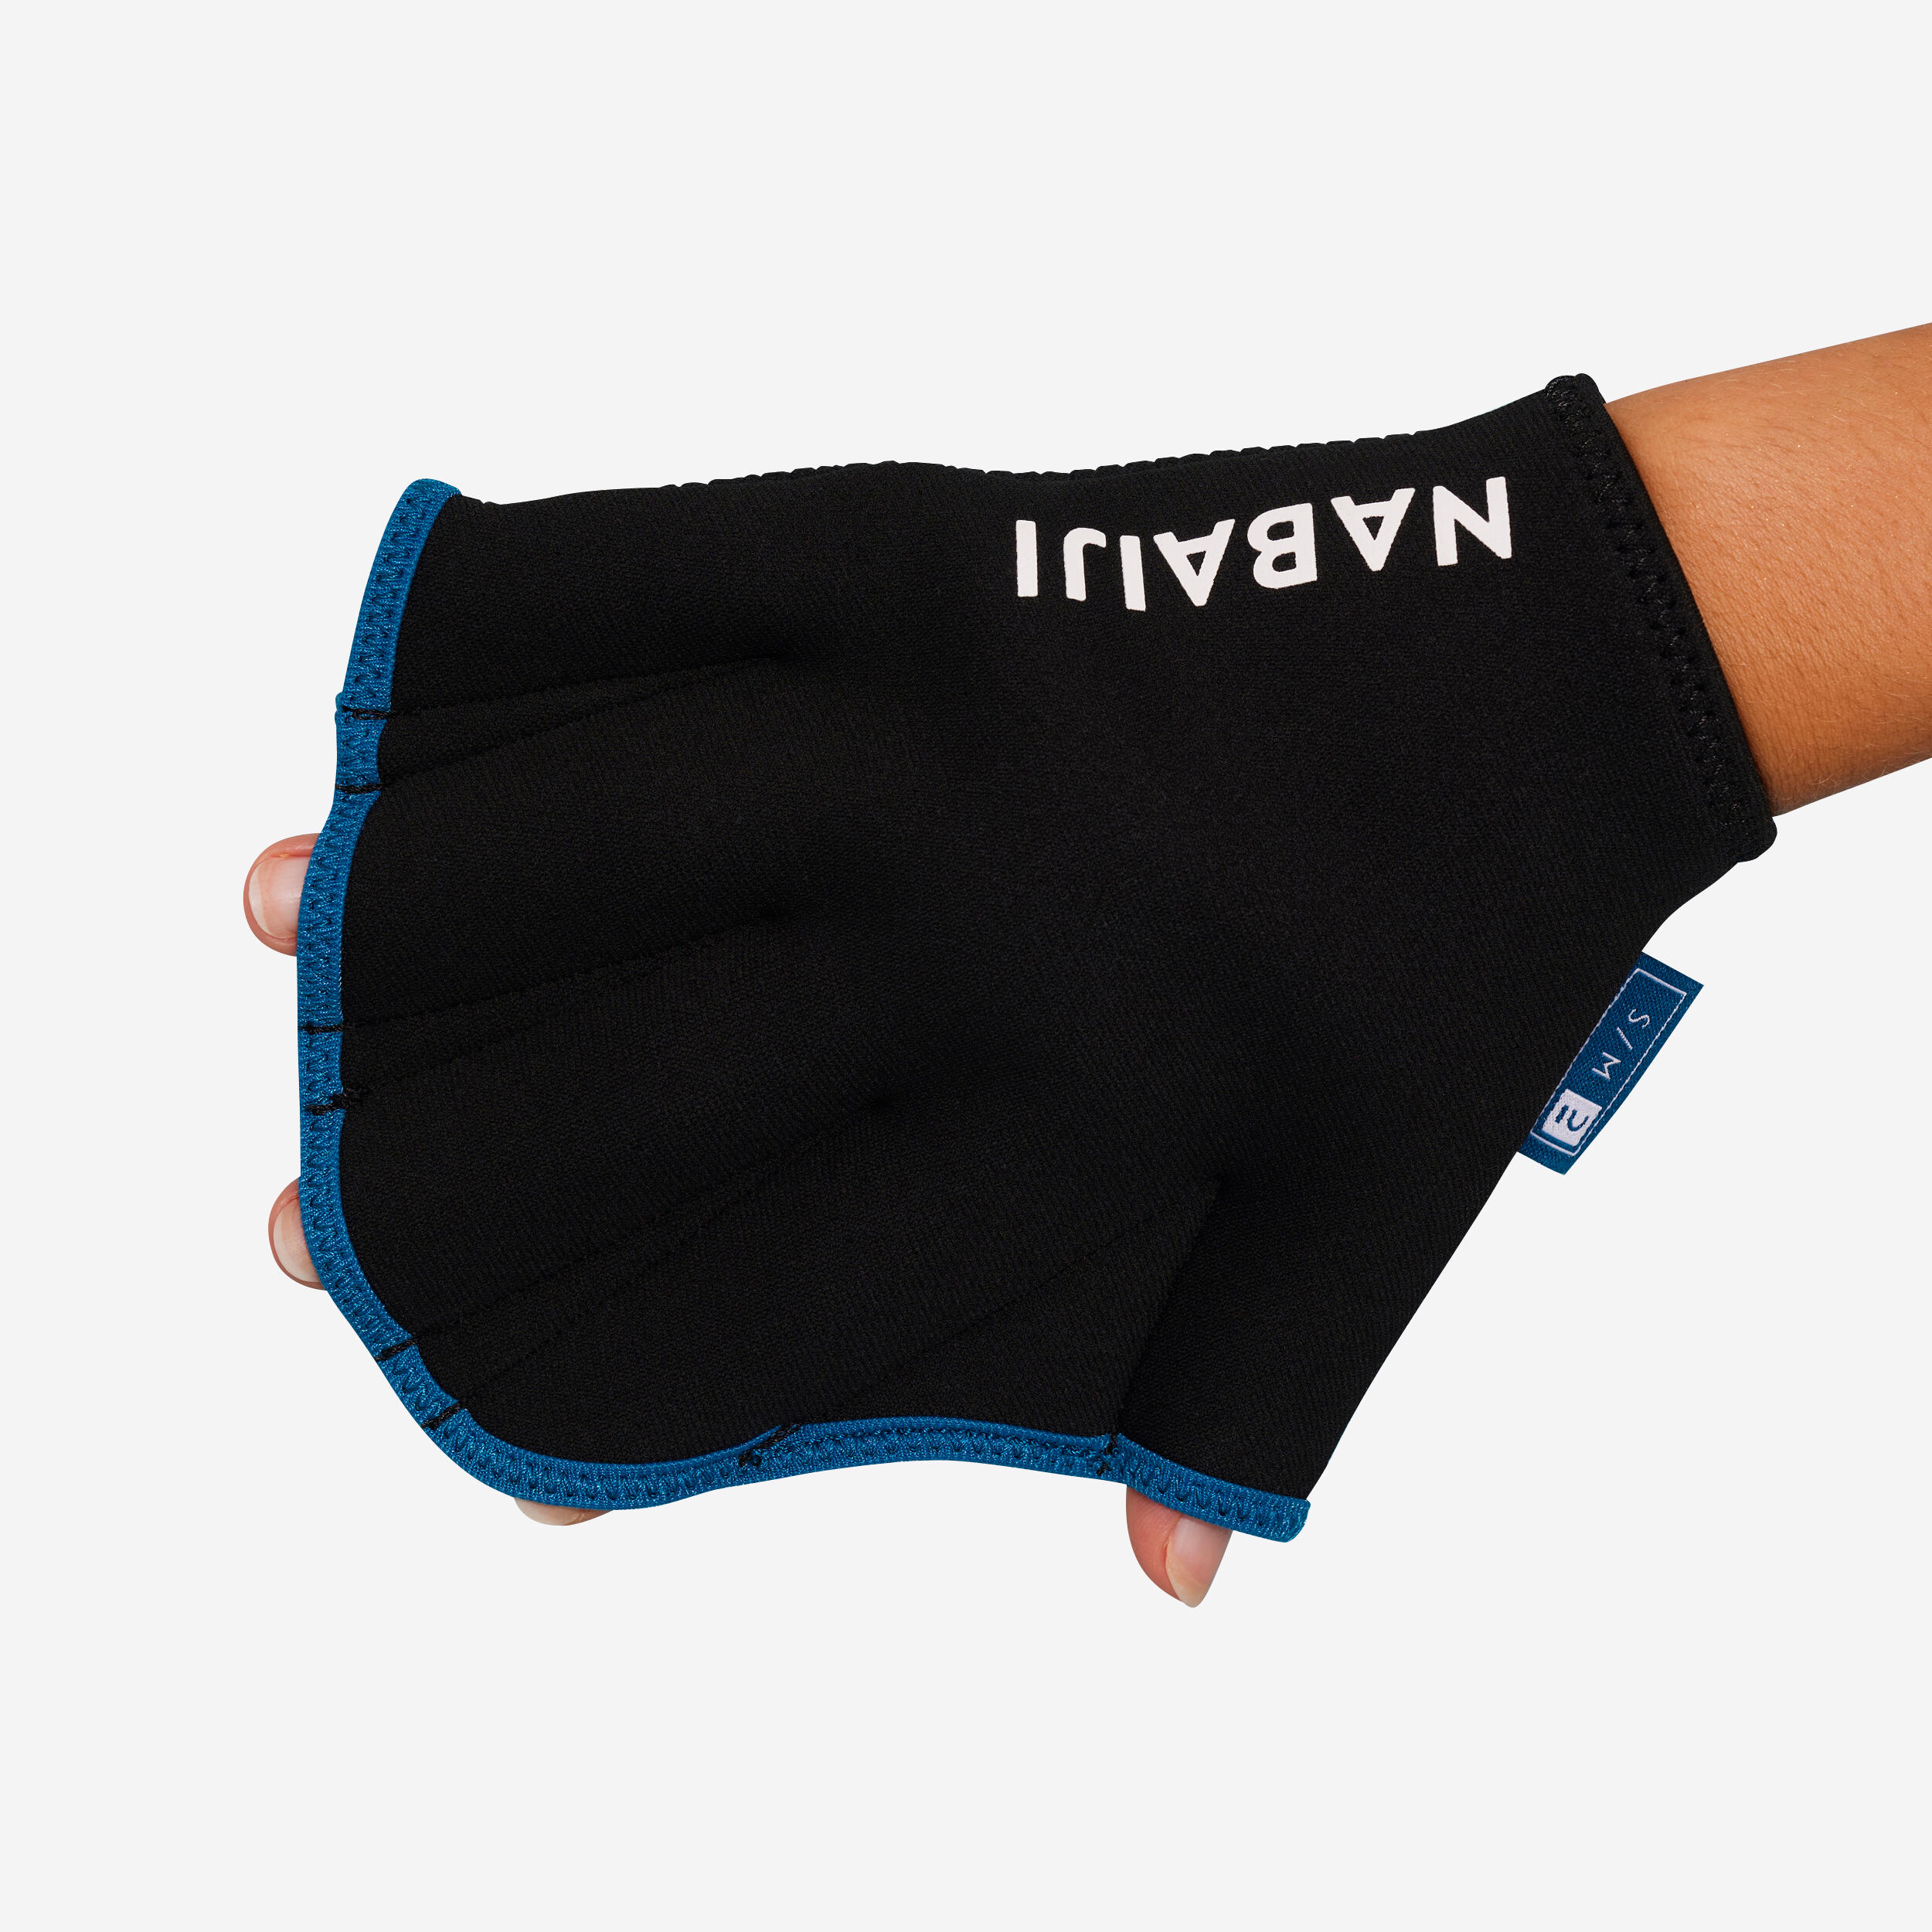 NABAIJI Pair of Aquafitness Neoprene Webbed Gloves black blue